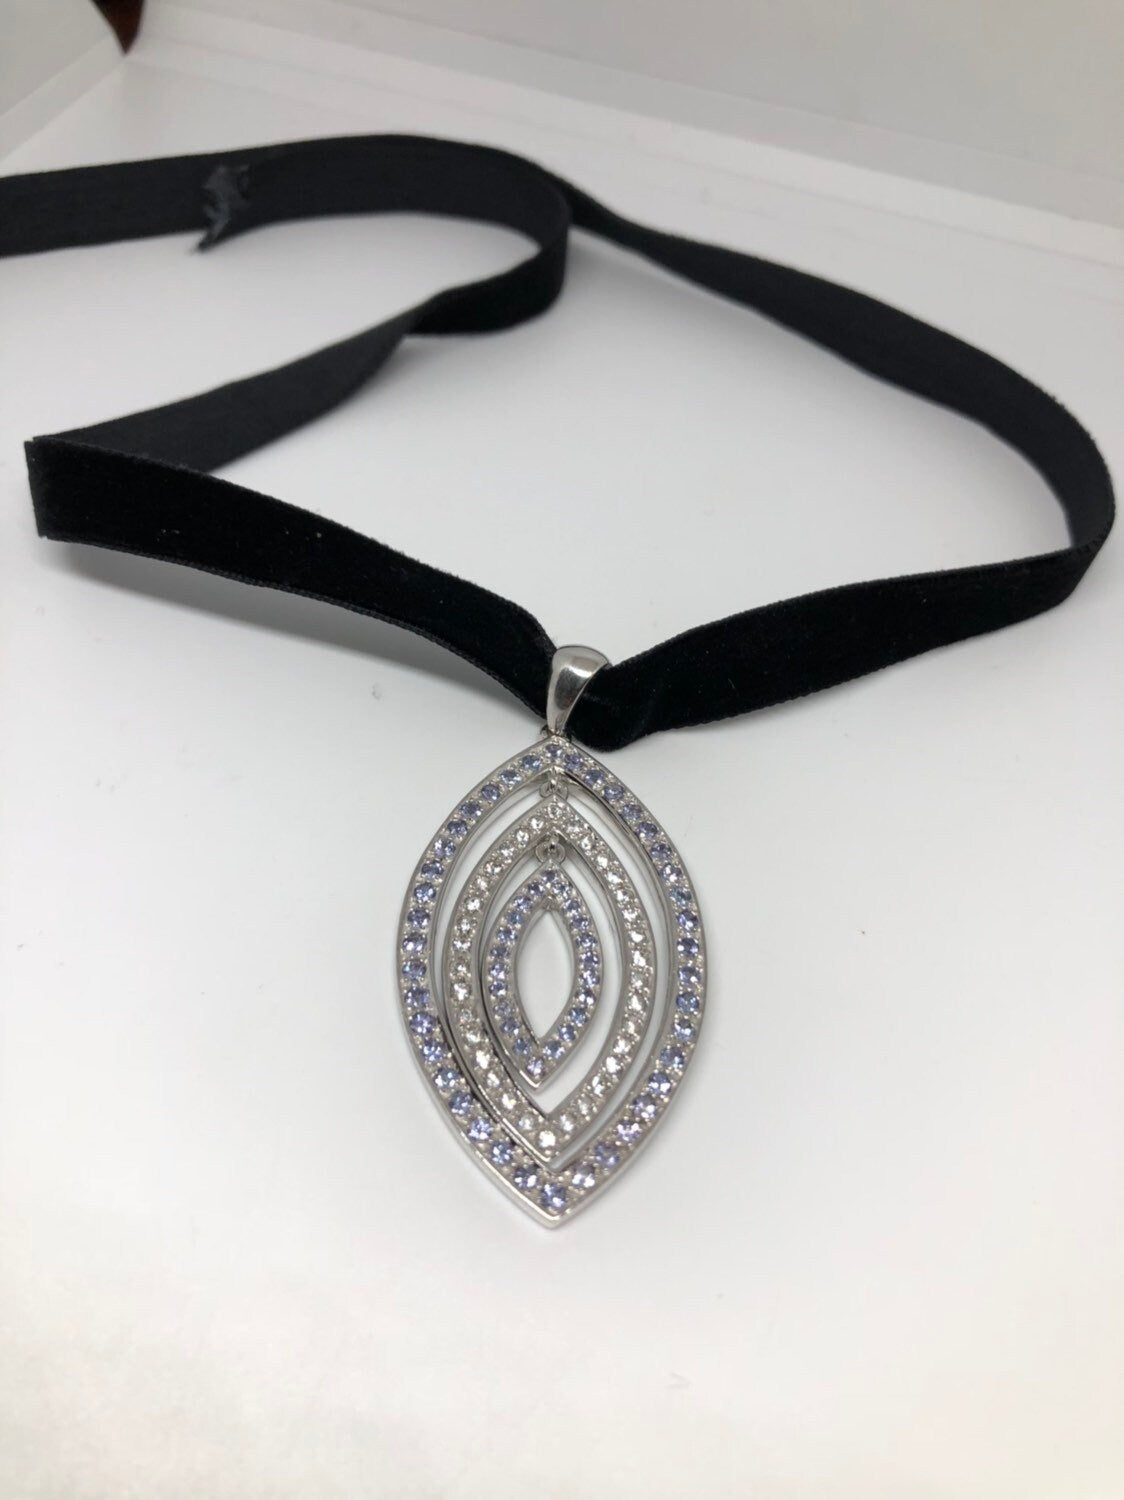 Vintage Blue Tanzanite choker Necklace 925 Stering Silver Pendant